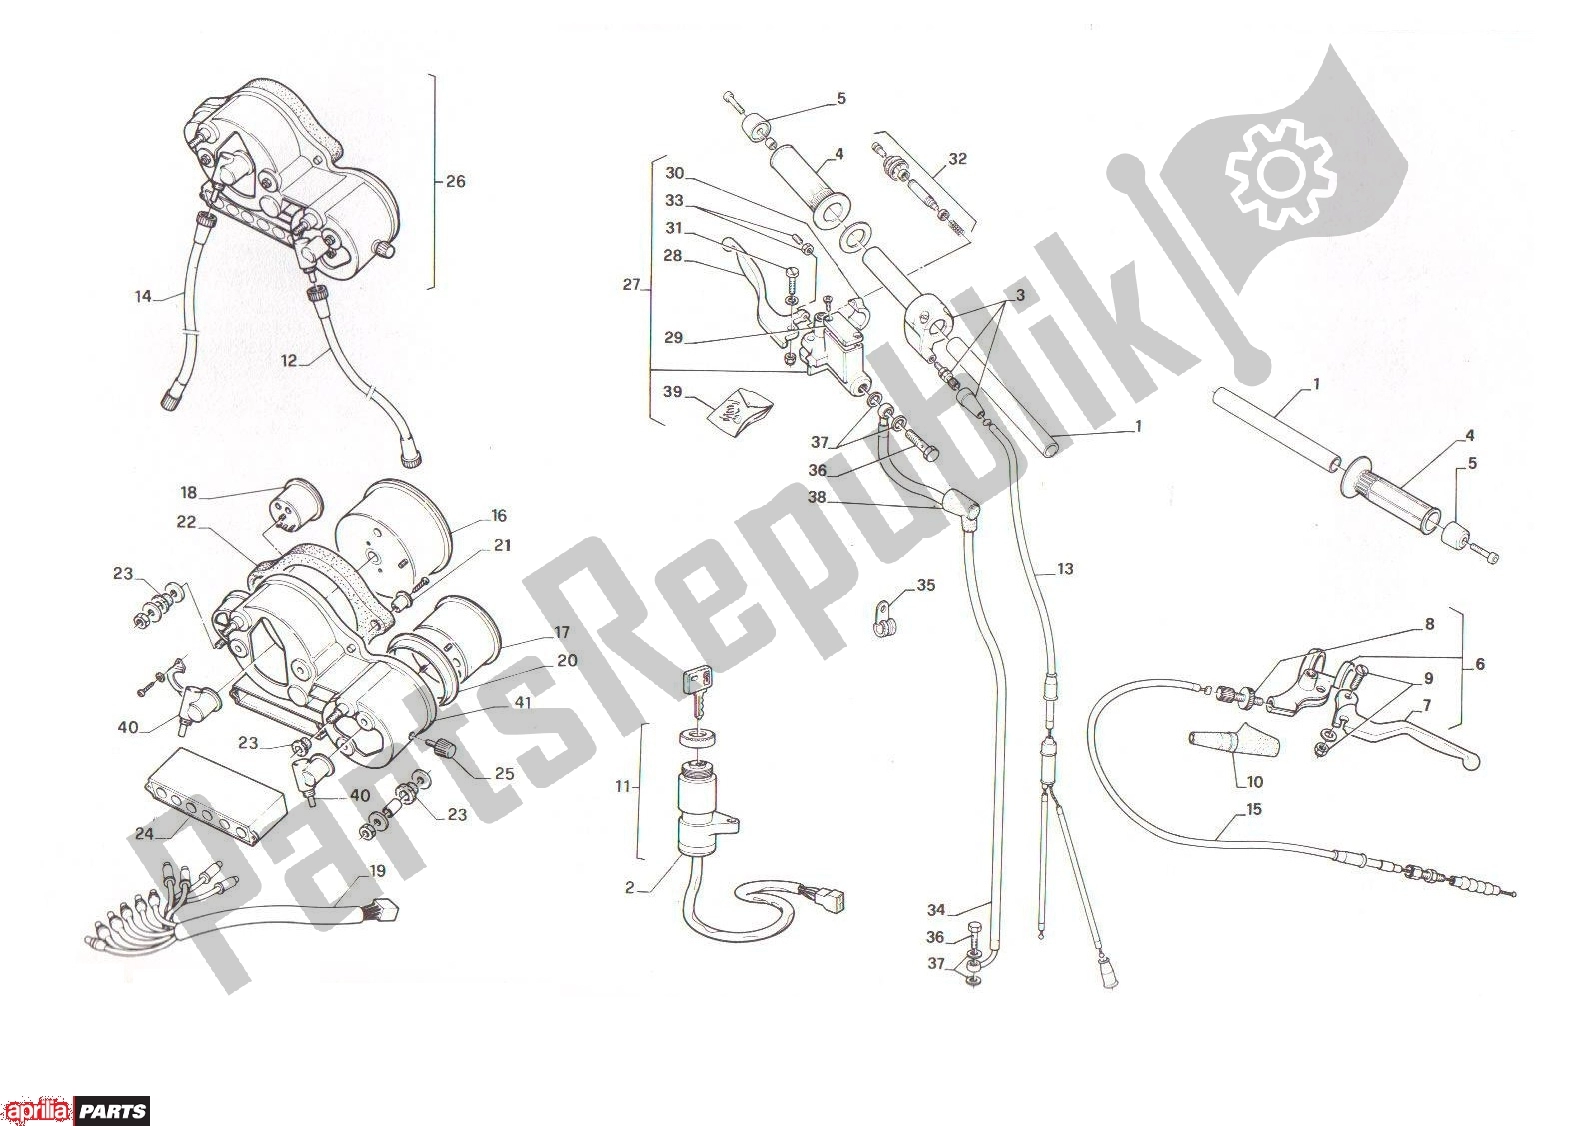 All parts for the Handle Bar of the Aprilia AF1 Futura 321 50 1991 - 1992